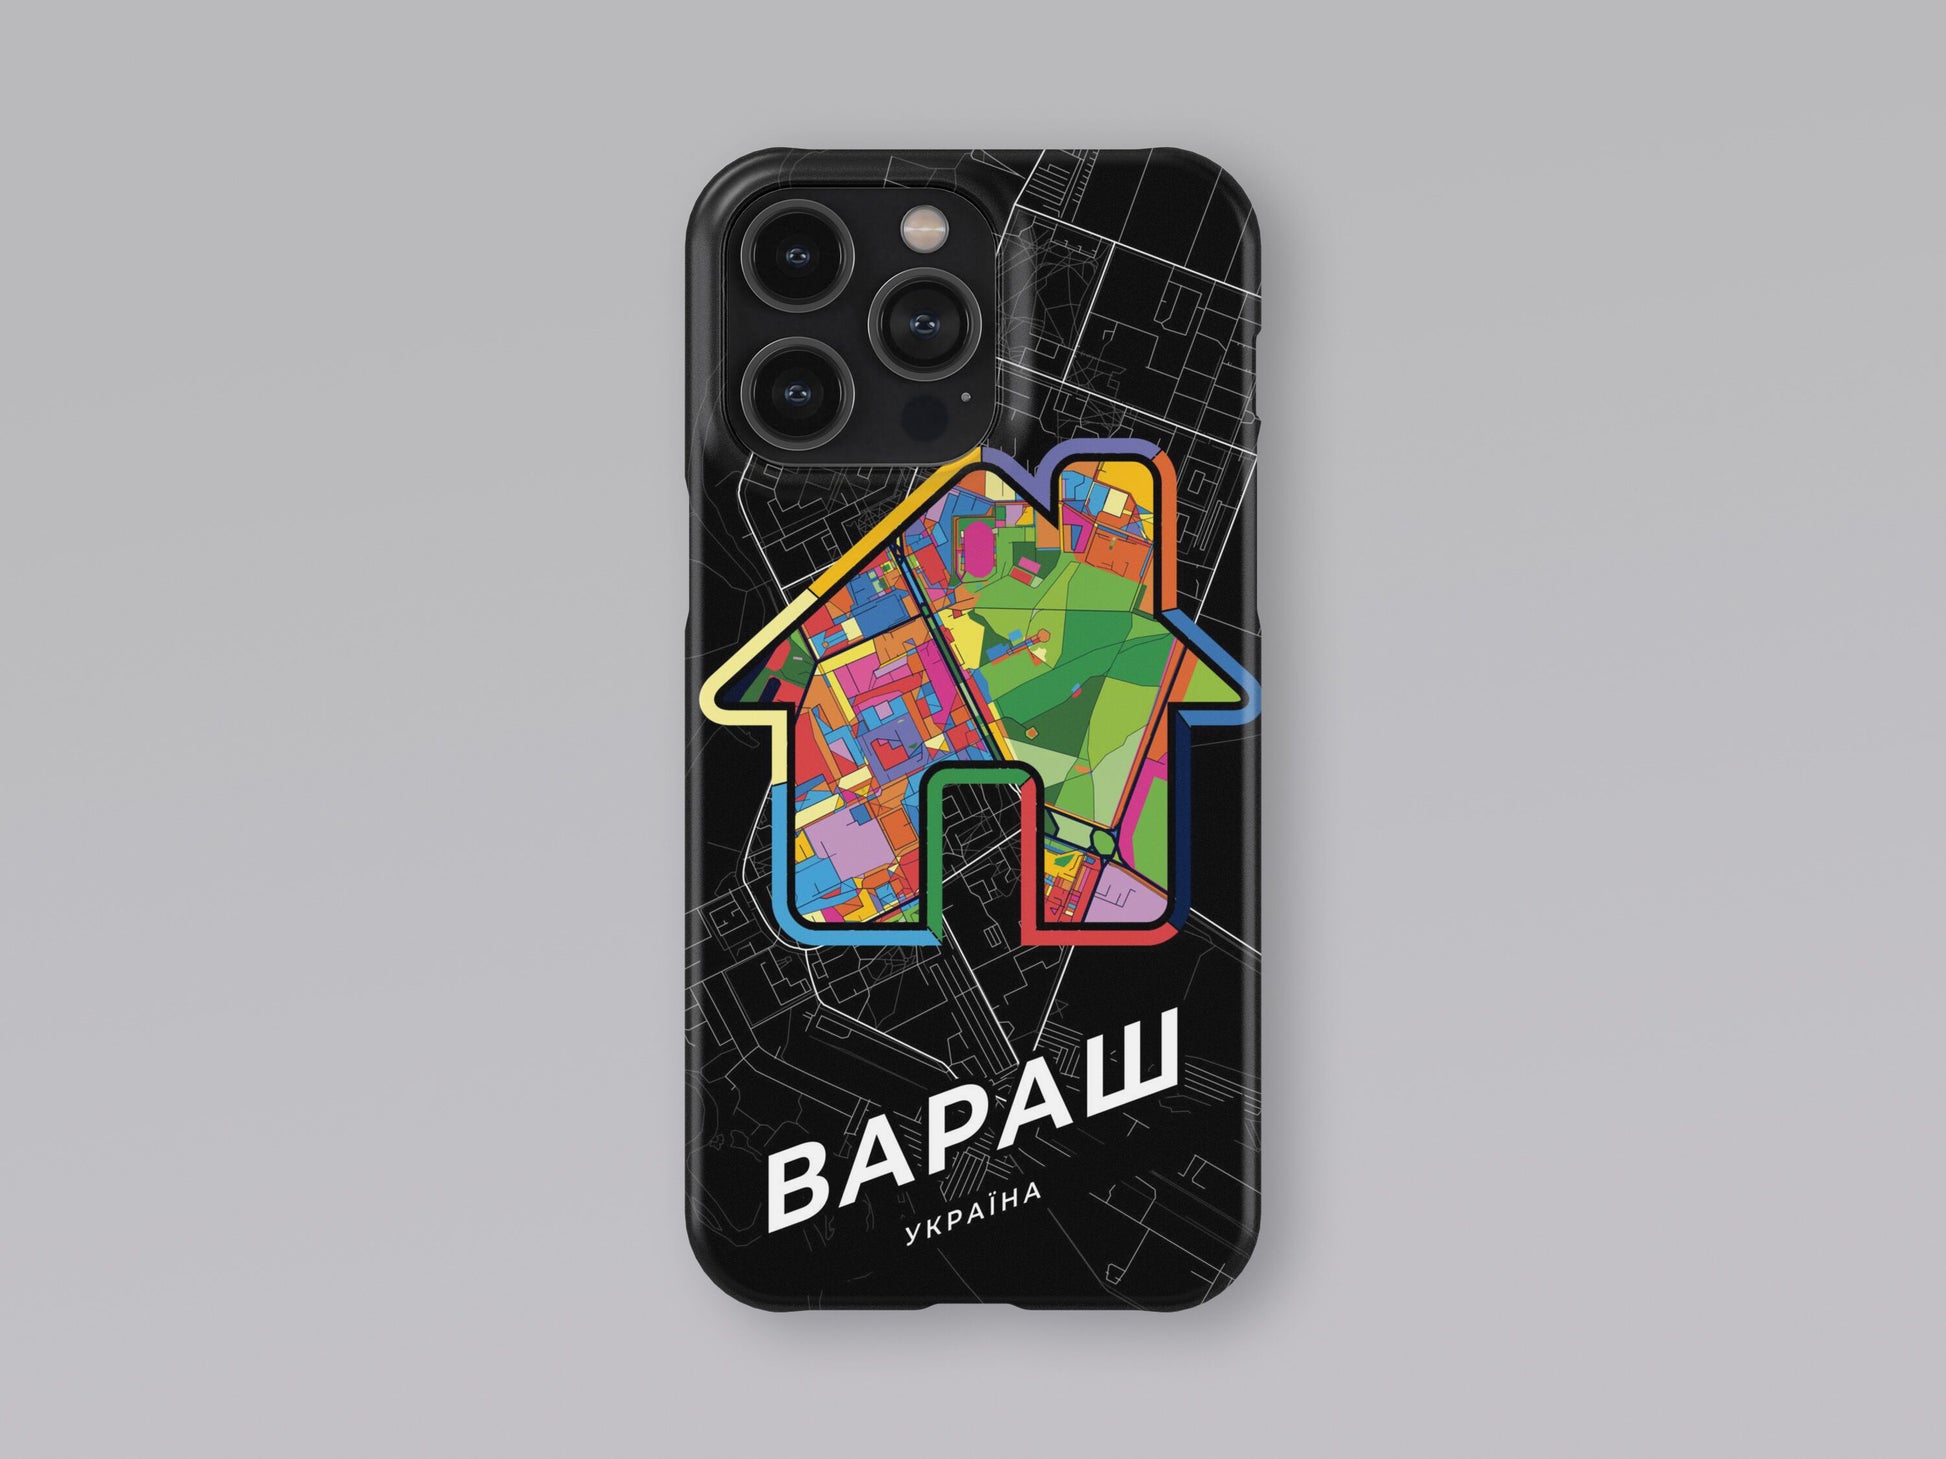 Varash Ukraine slim phone case with colorful icon 3